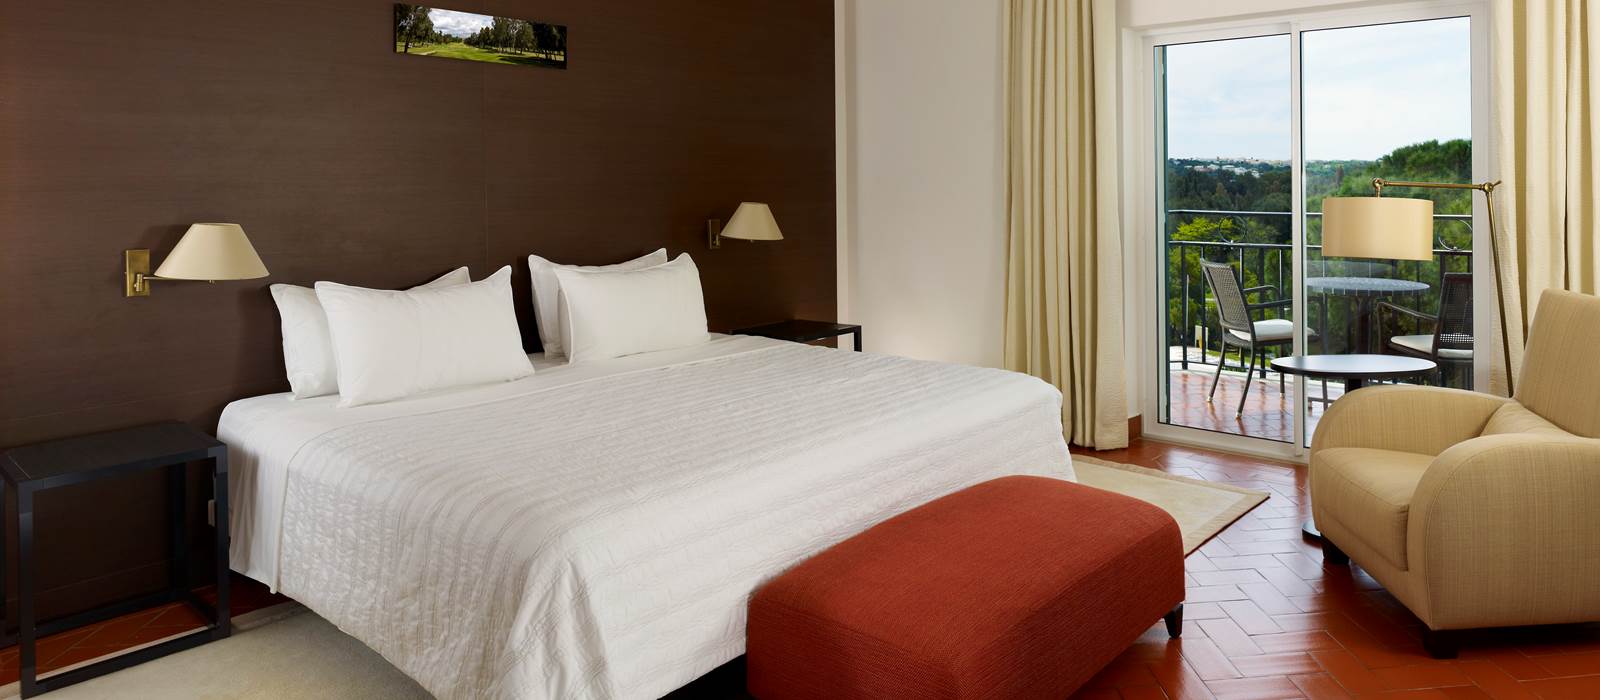 Bedroom at Penina Hotel and Golf Resort